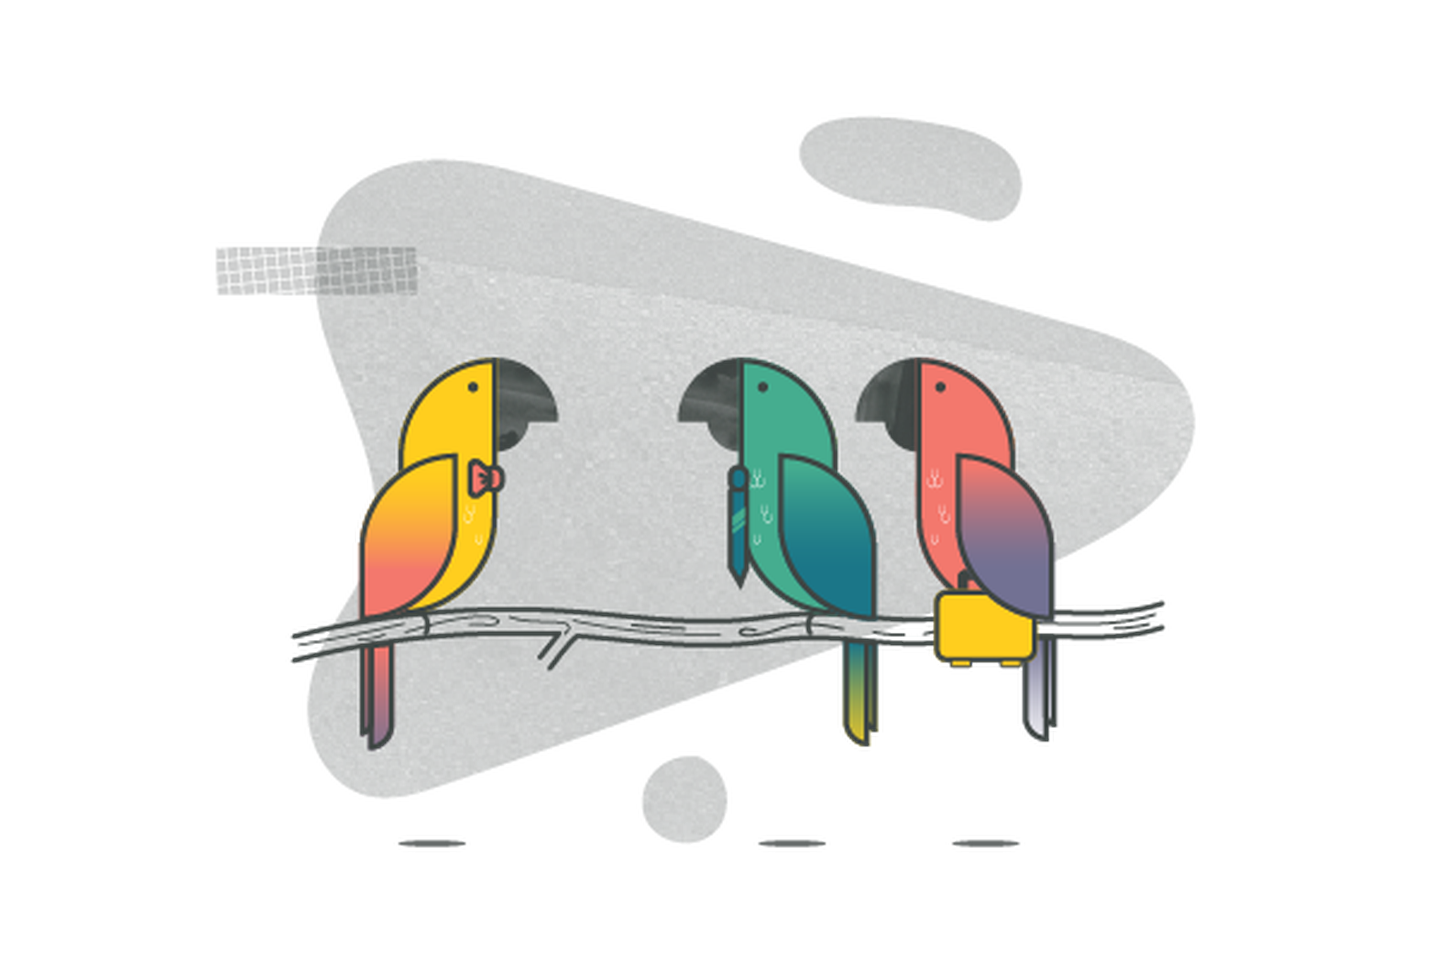 Illustration of 3 parrots